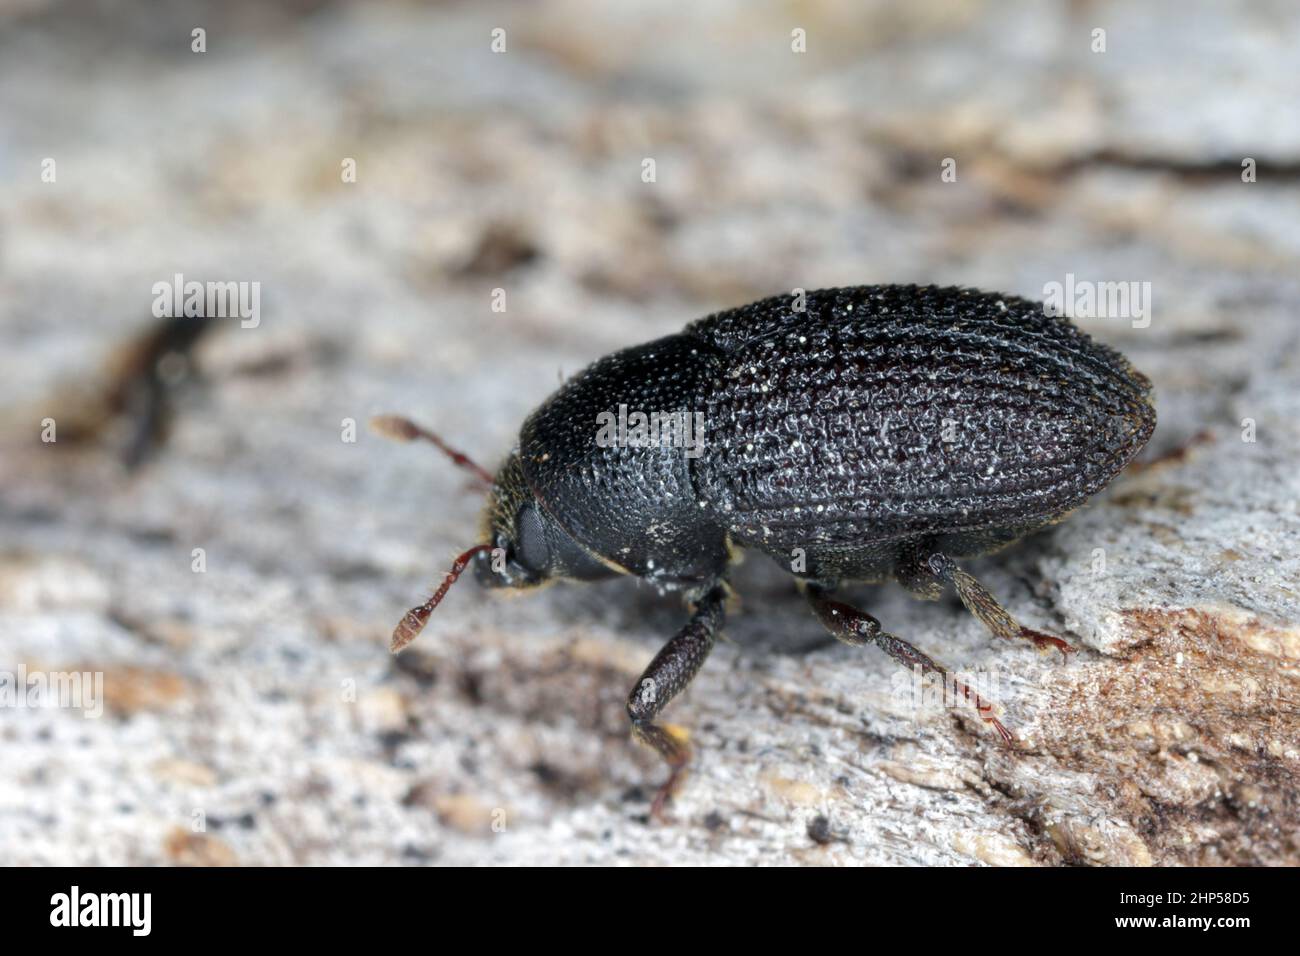 Greater ash bark beetle (Hylesinus crenatus), on wood. Stock Photo